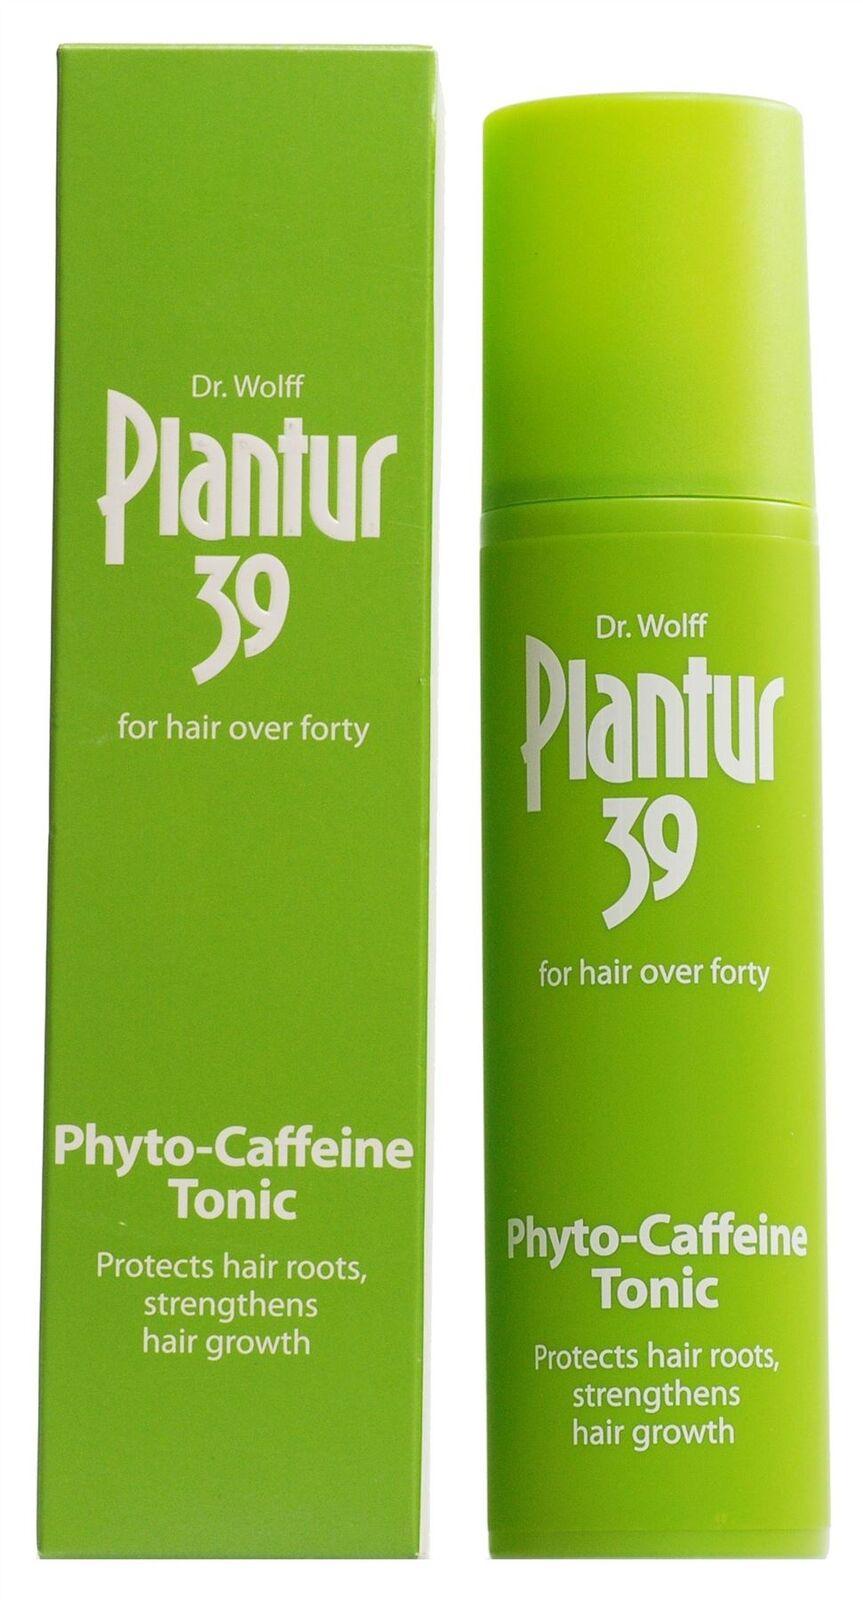 DRWOLFF Тоник plantur 39 phyto-caffeine 200ml